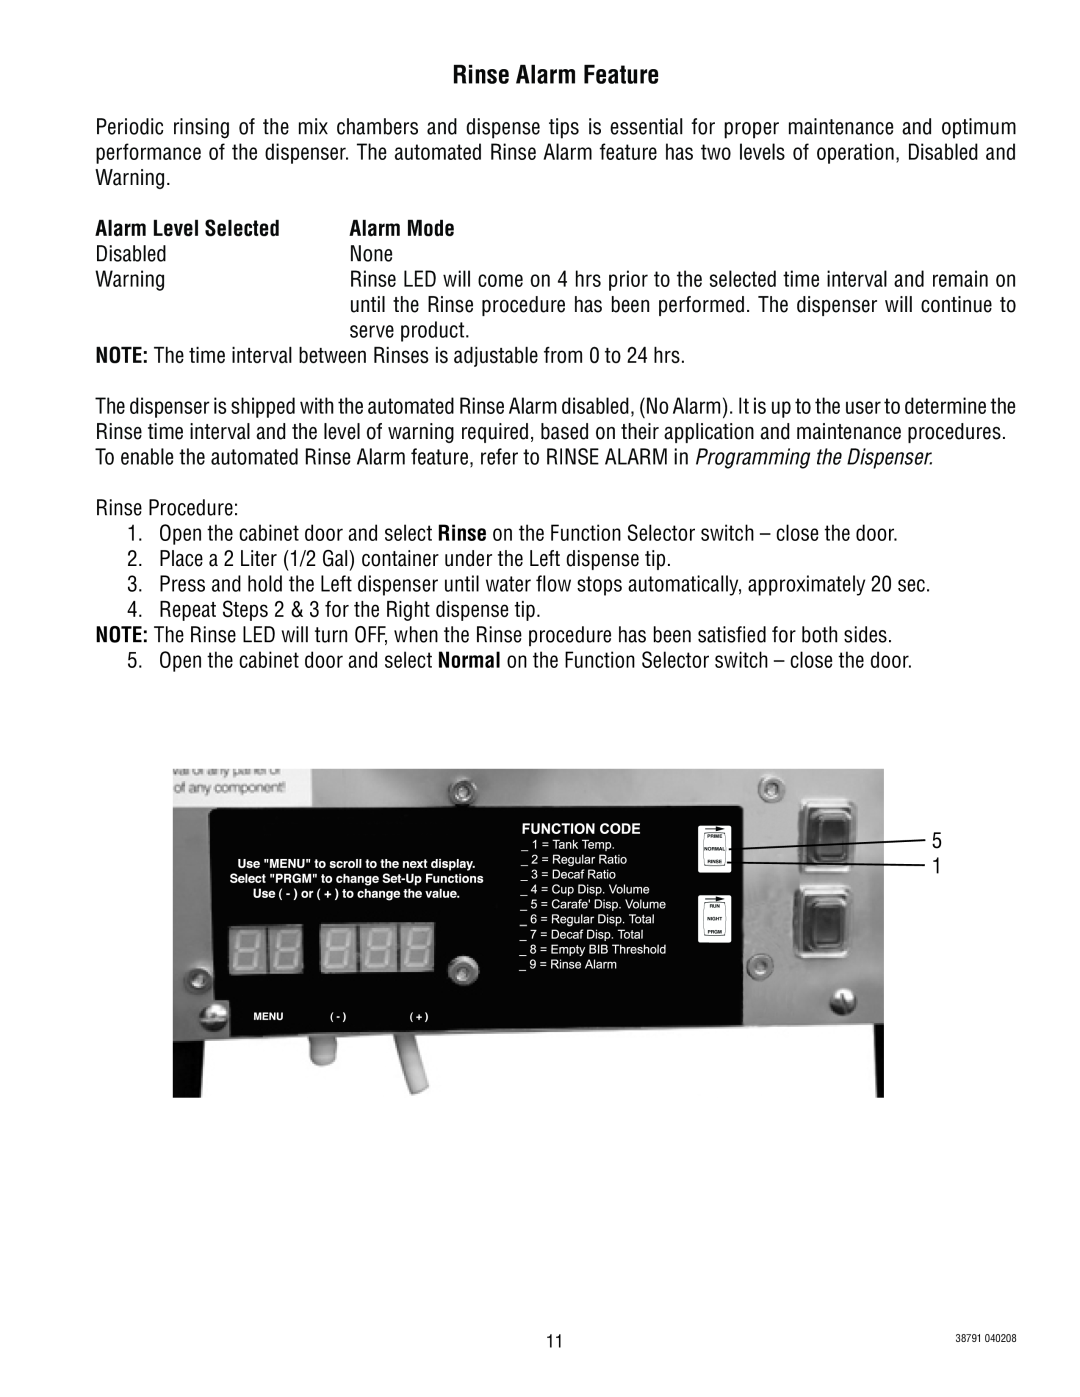 Bunn 38791.0000K service manual Rinse Alarm Feature, Alarm Level Selected, Alarm Mode 